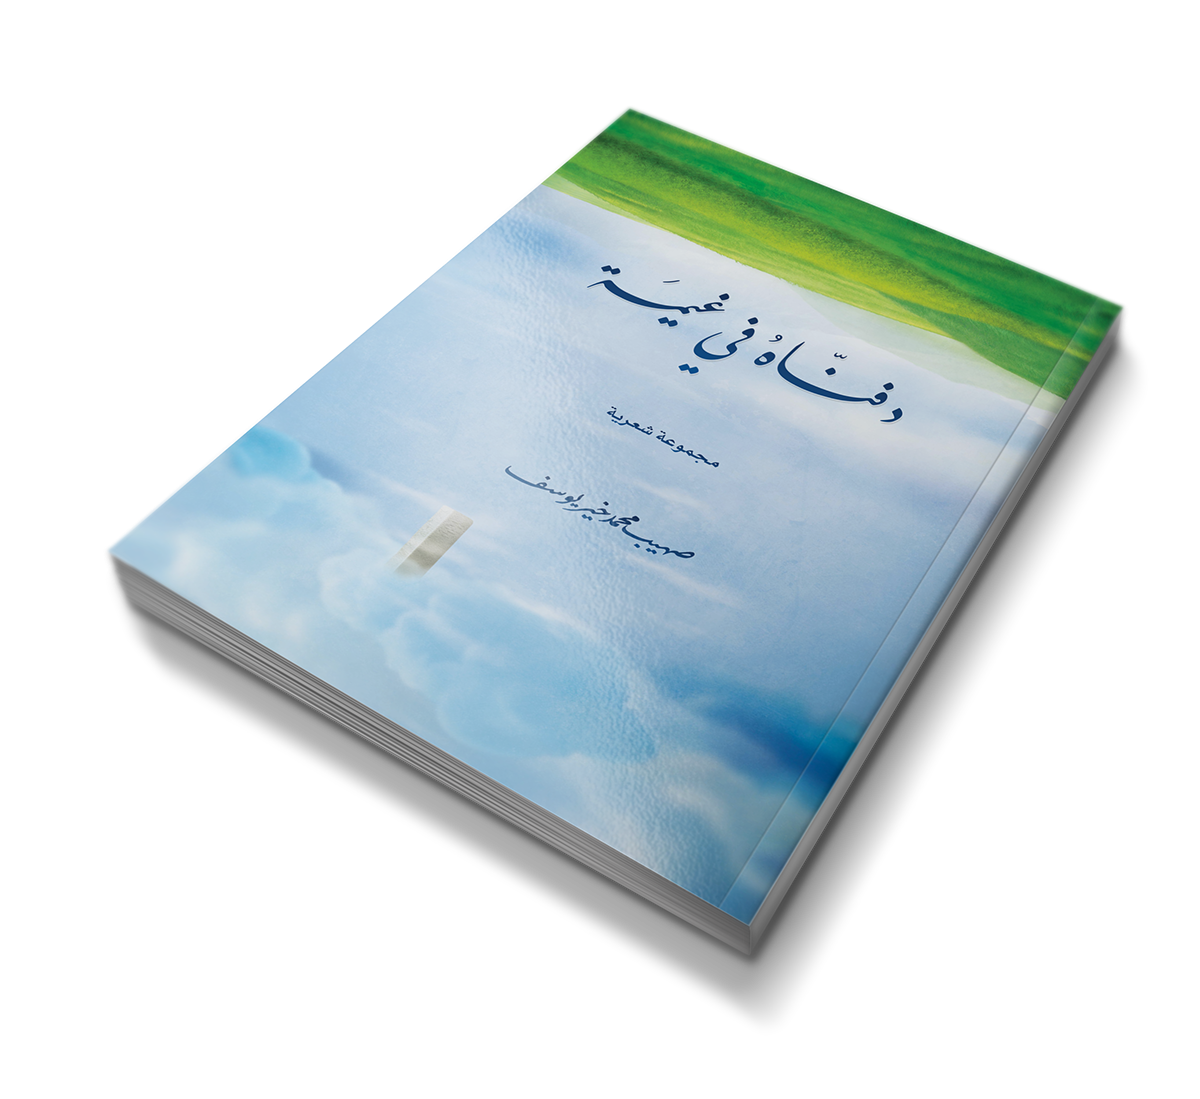 arabic book Photo Manipulation  cover clouds upside down